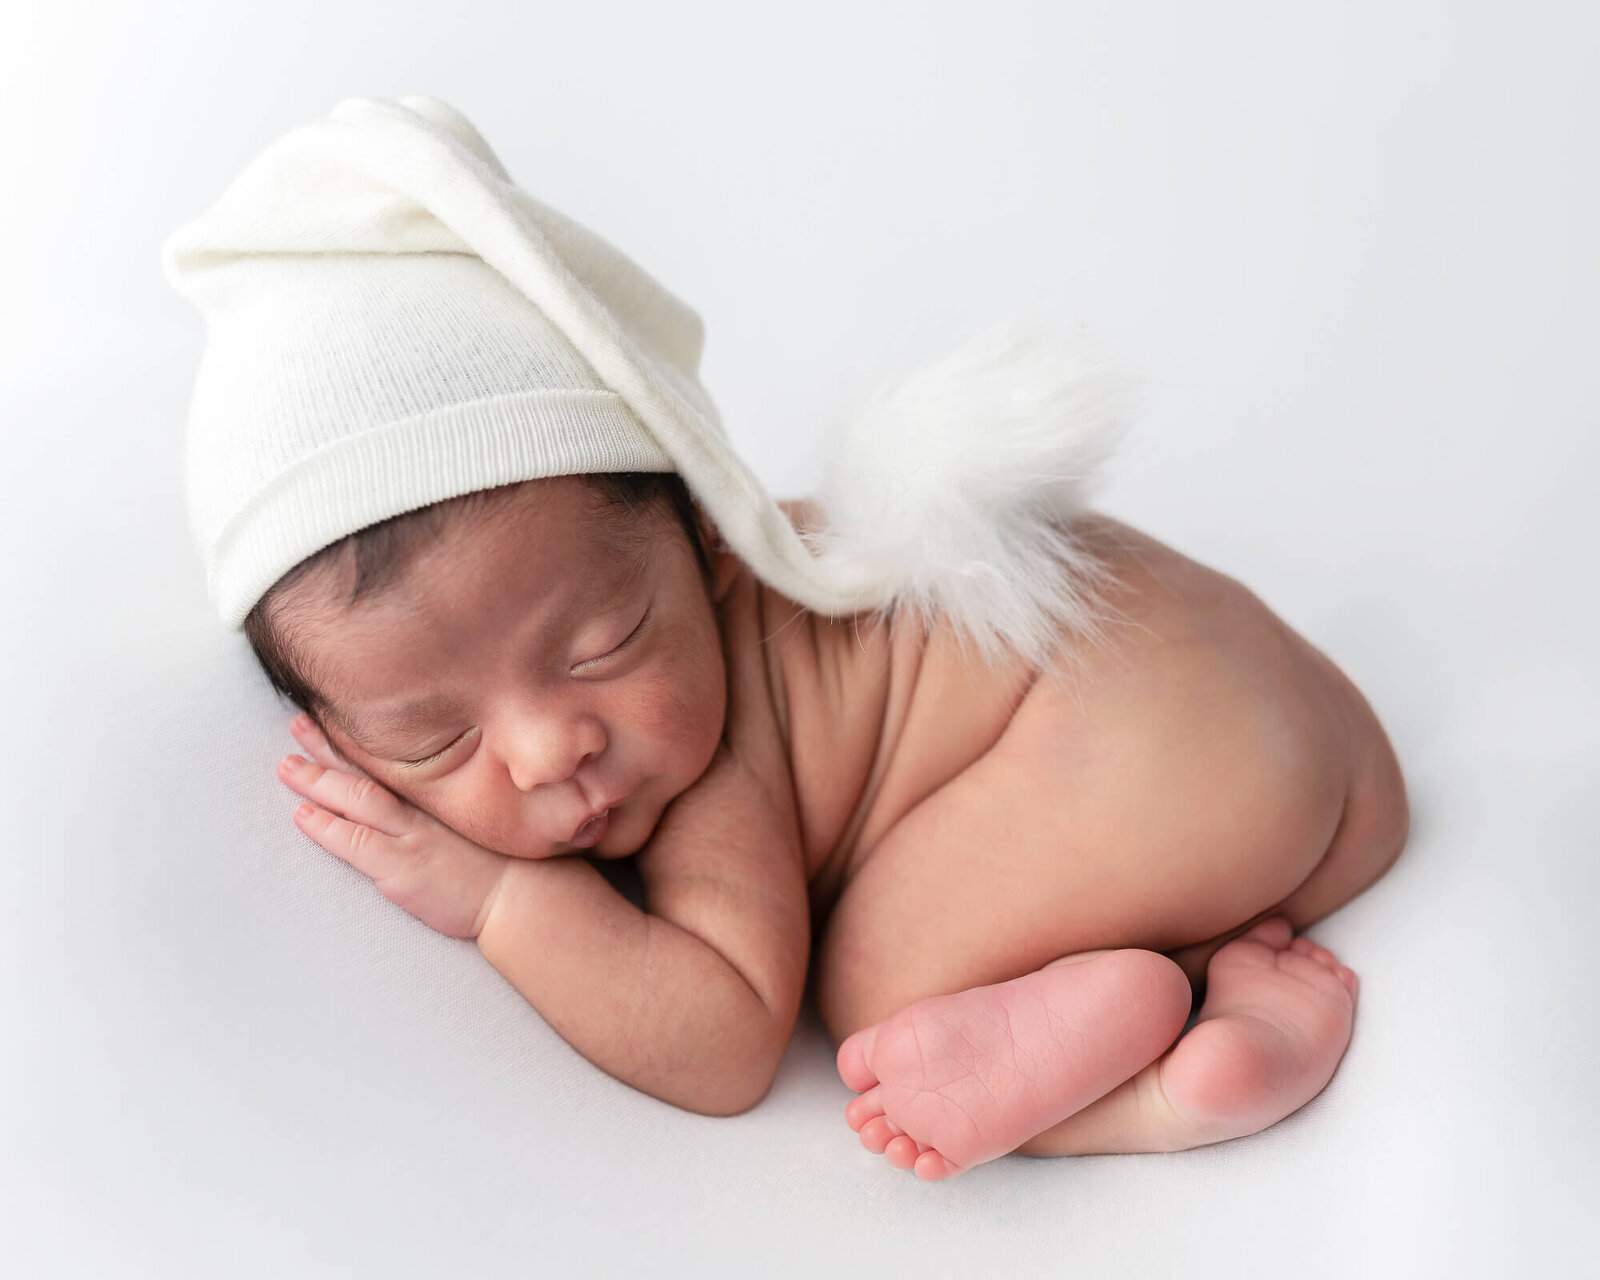 Newborn curled up on white